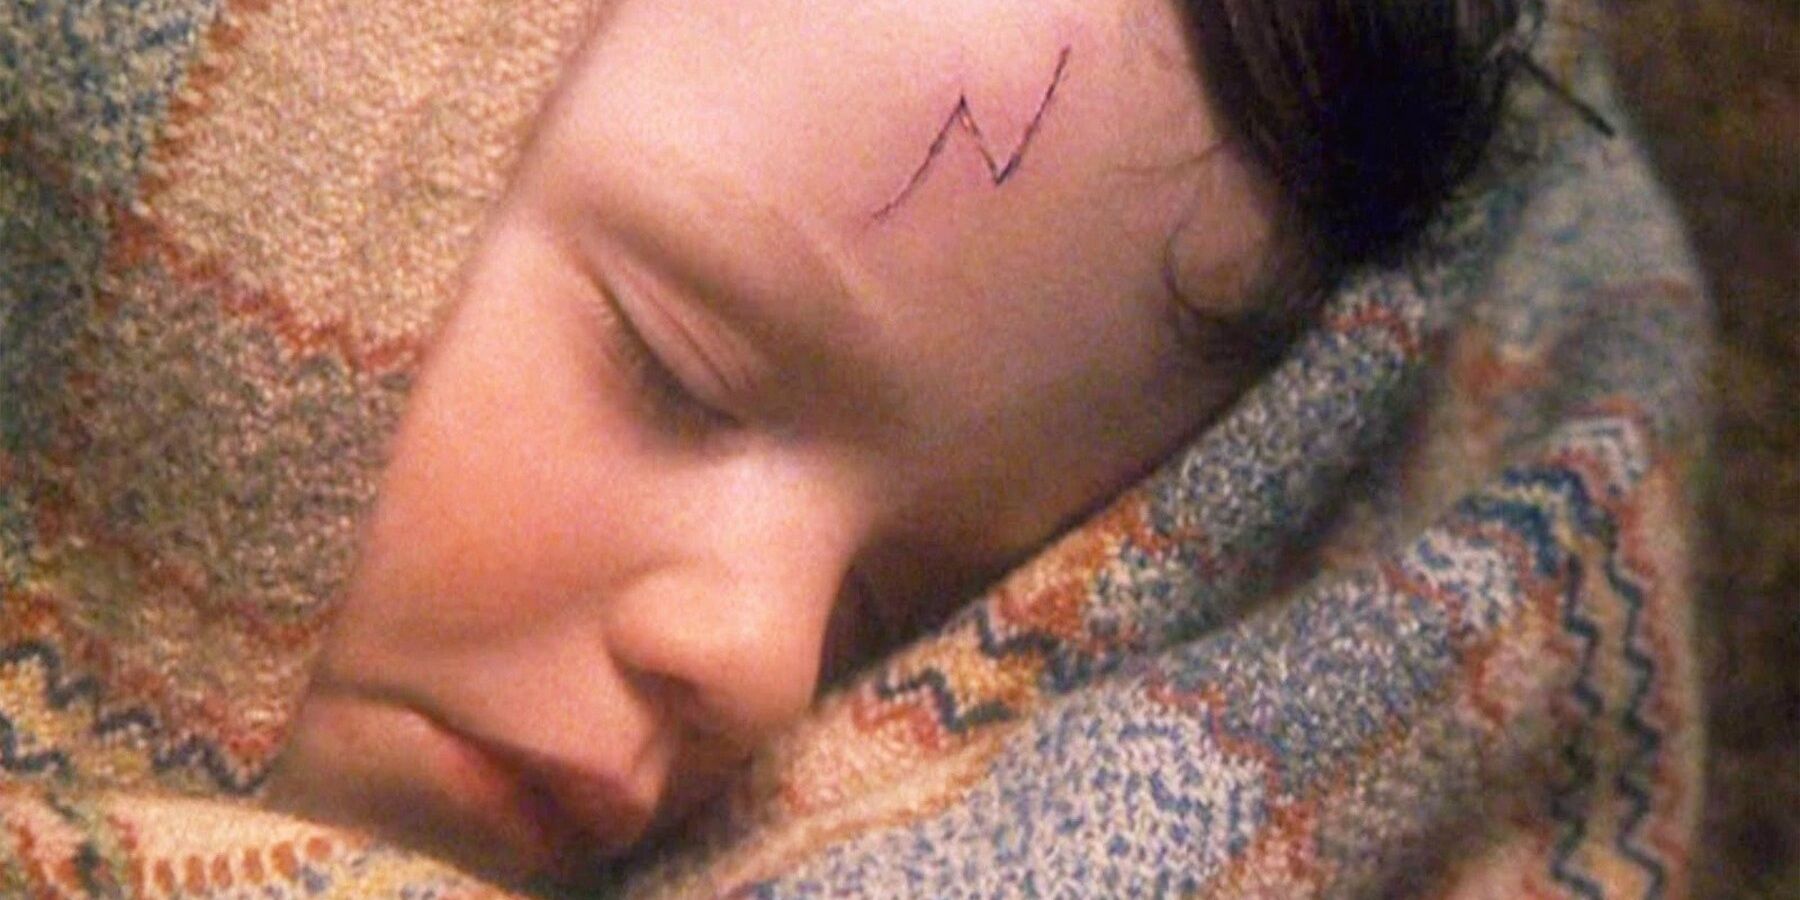 infant harry potter with a lightning bolt scar